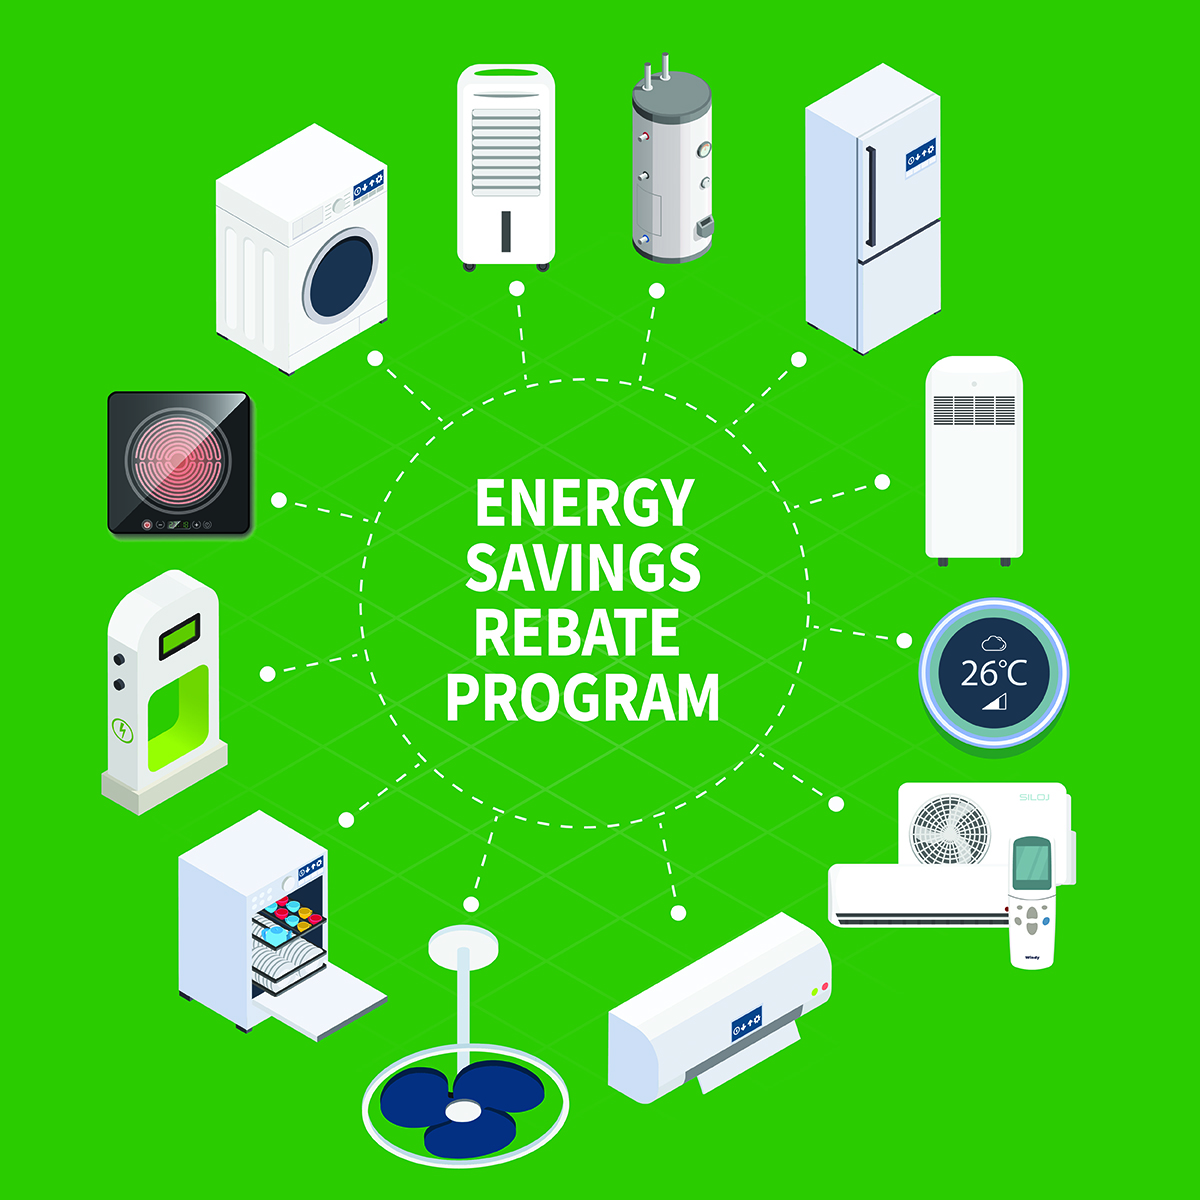 New Rebate Program To Improve Energy Savings For Ontarians BSG